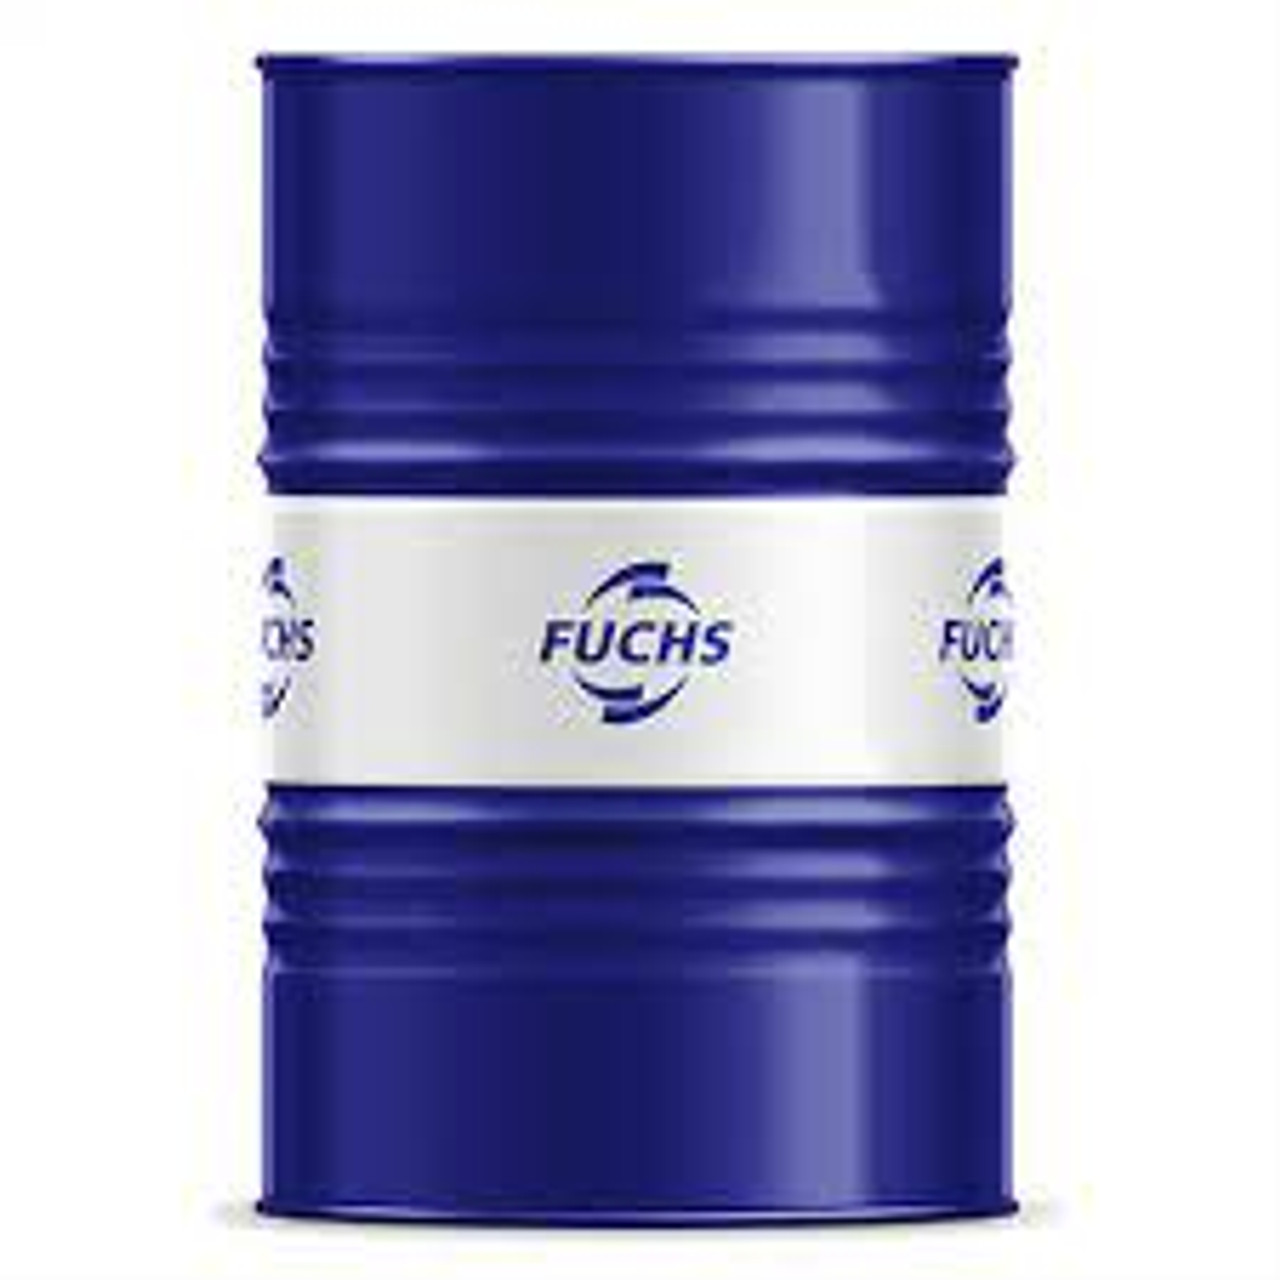 Fuchs Reonlin Unisyn CLP 680 - 55 gallon Drum